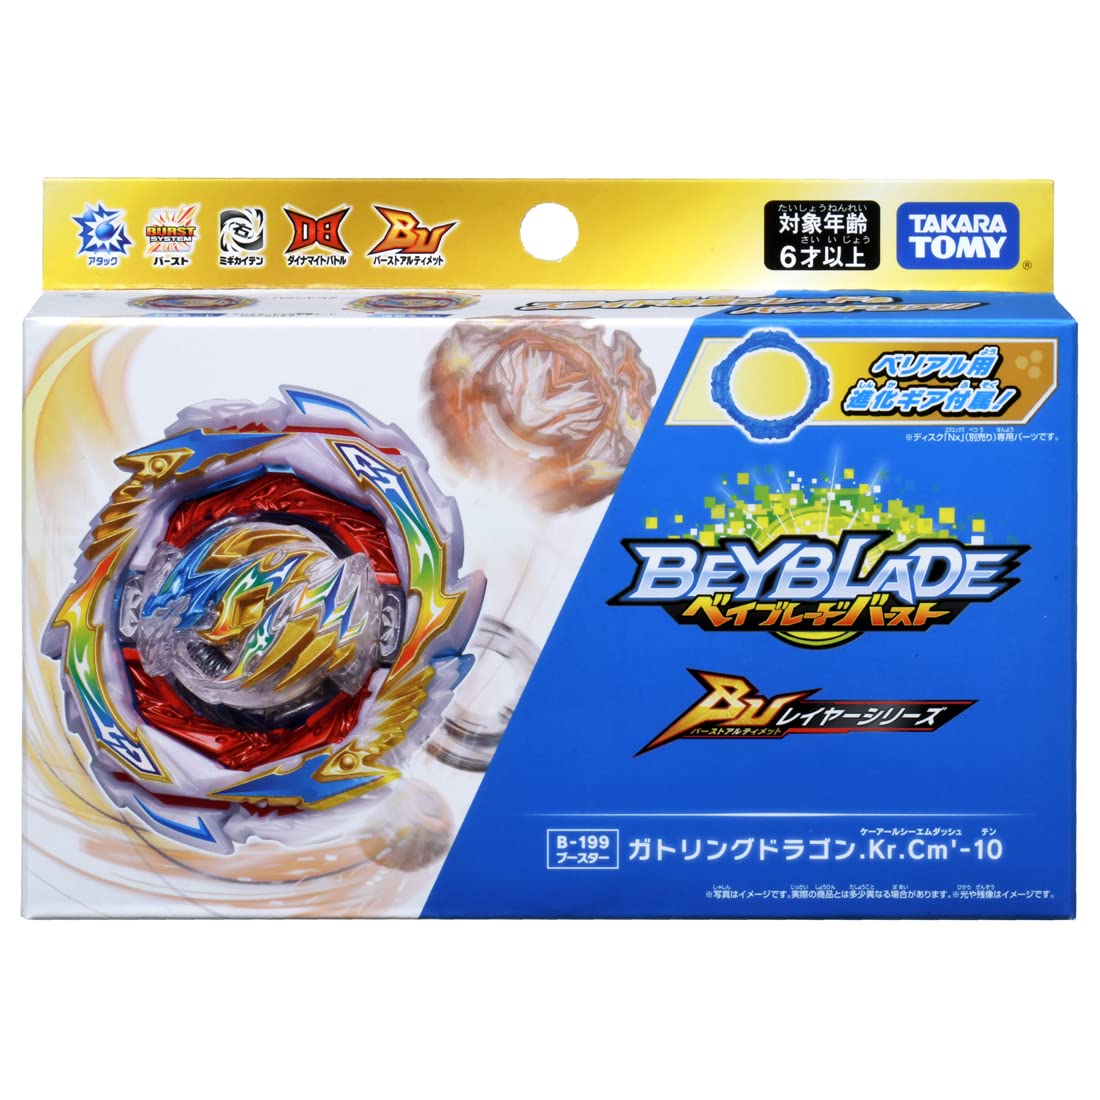 Takara Tomy Beyblade Burst B-199 Gatling Dragon Karma Charge Metal'-10 w/ D Gear (Japan Import)